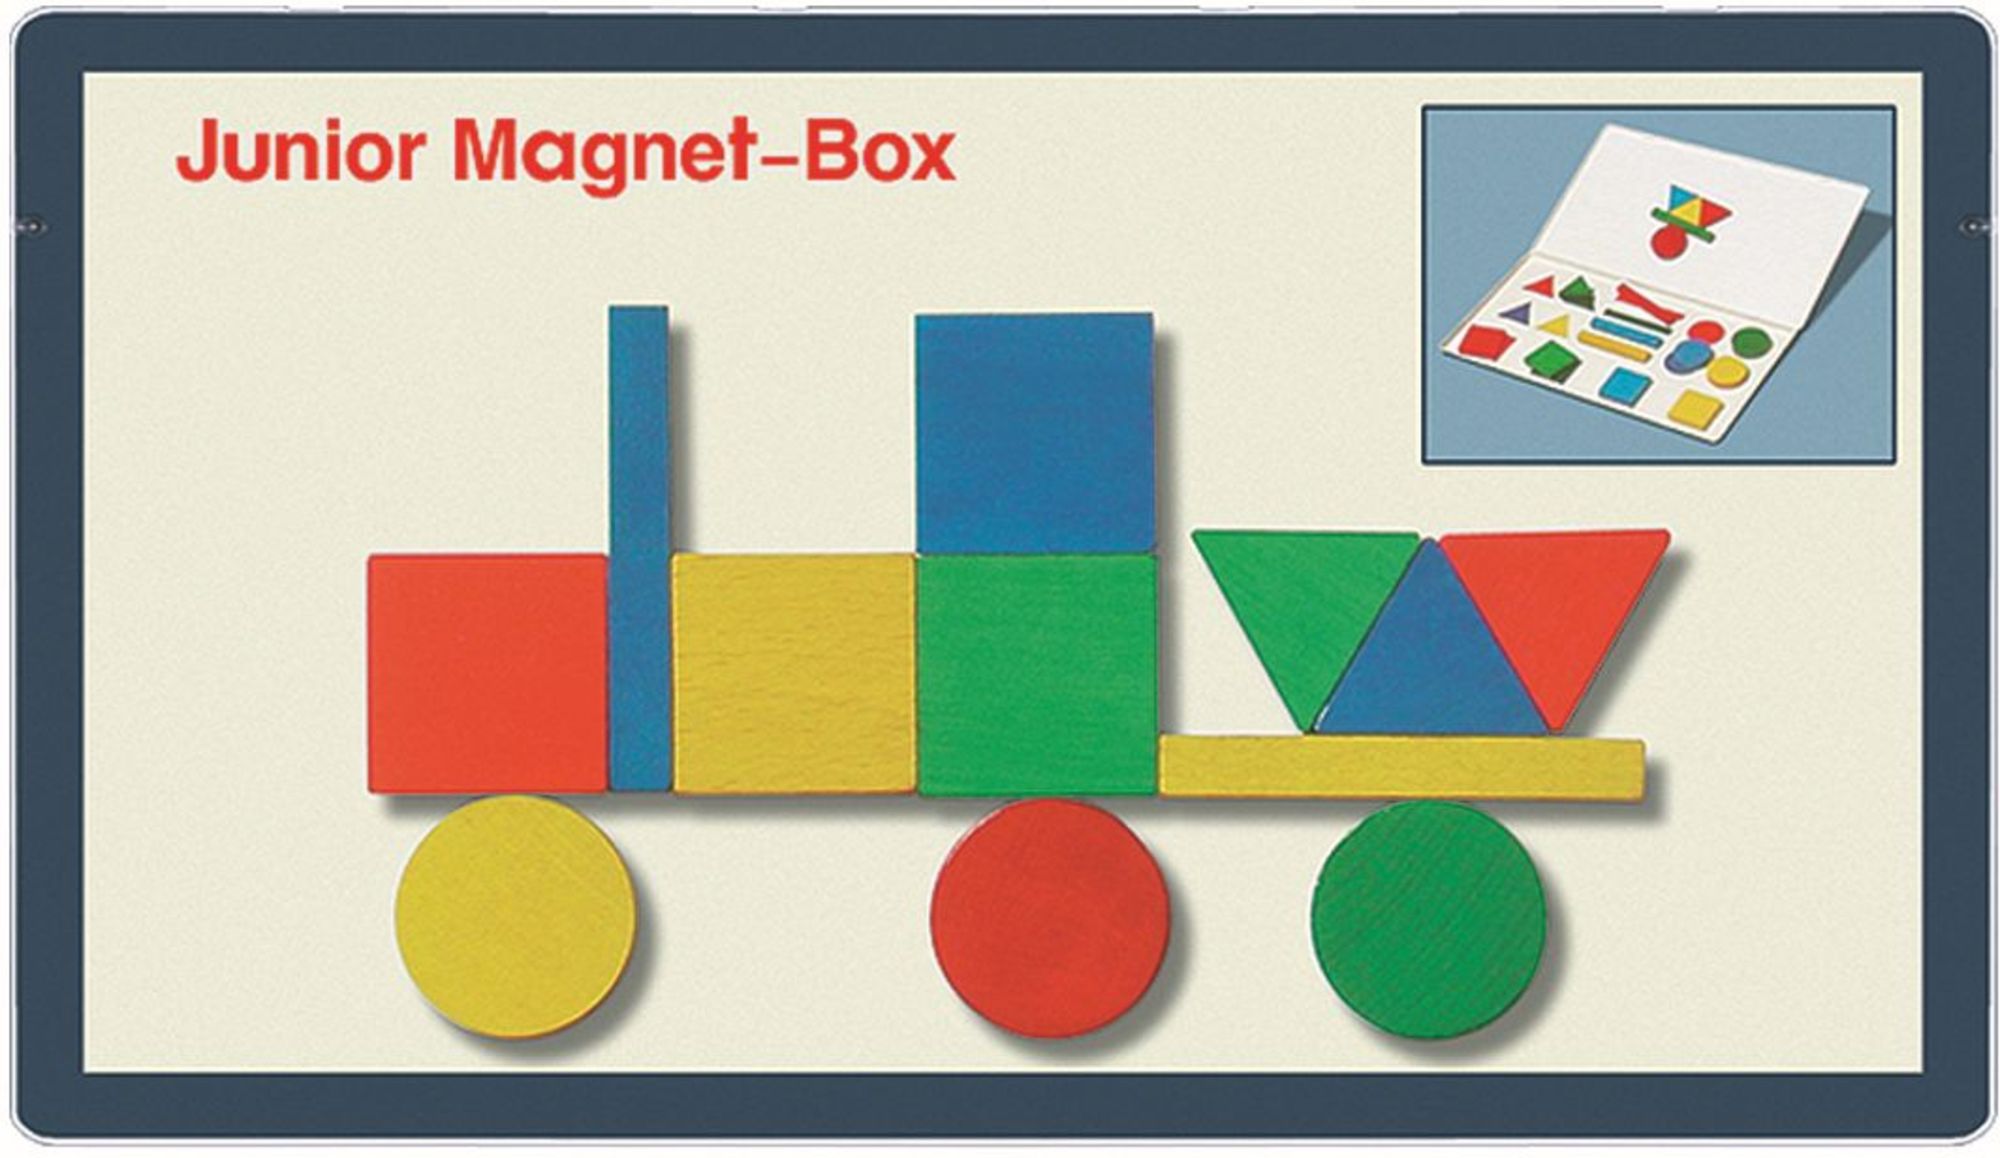 https://images.thalia.media/-/BF2000-2000/ae419d7f915a4985b22cd1606fe469cd/oberschwaebische-magnetspiele-junior-magnet-box.jpeg